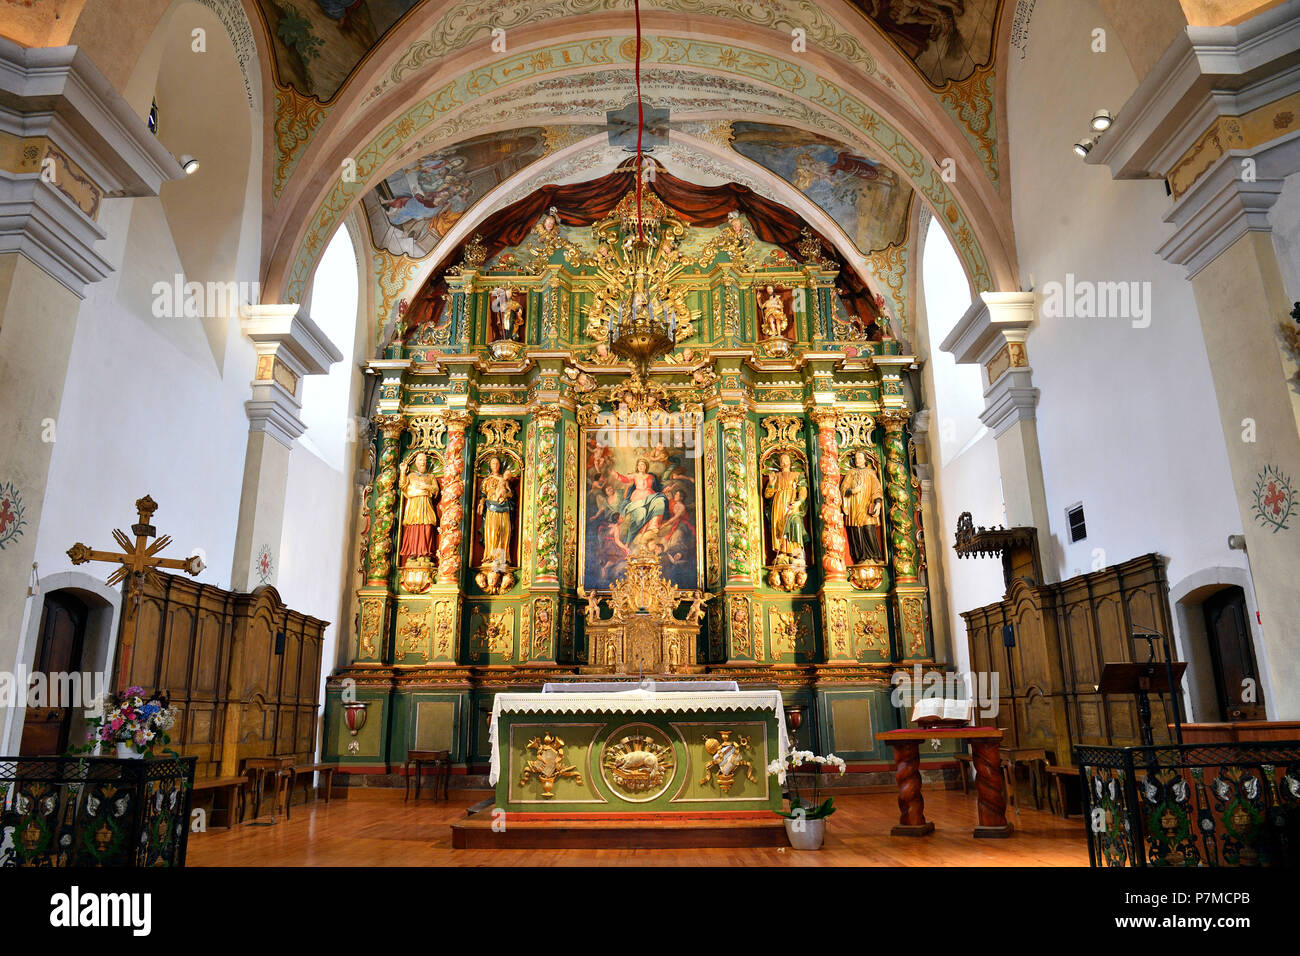 France, Haute Savoie, Cordon, Les sentiers du baroque, Our Lady of Assumption church, Baroque reredos Stock Photo